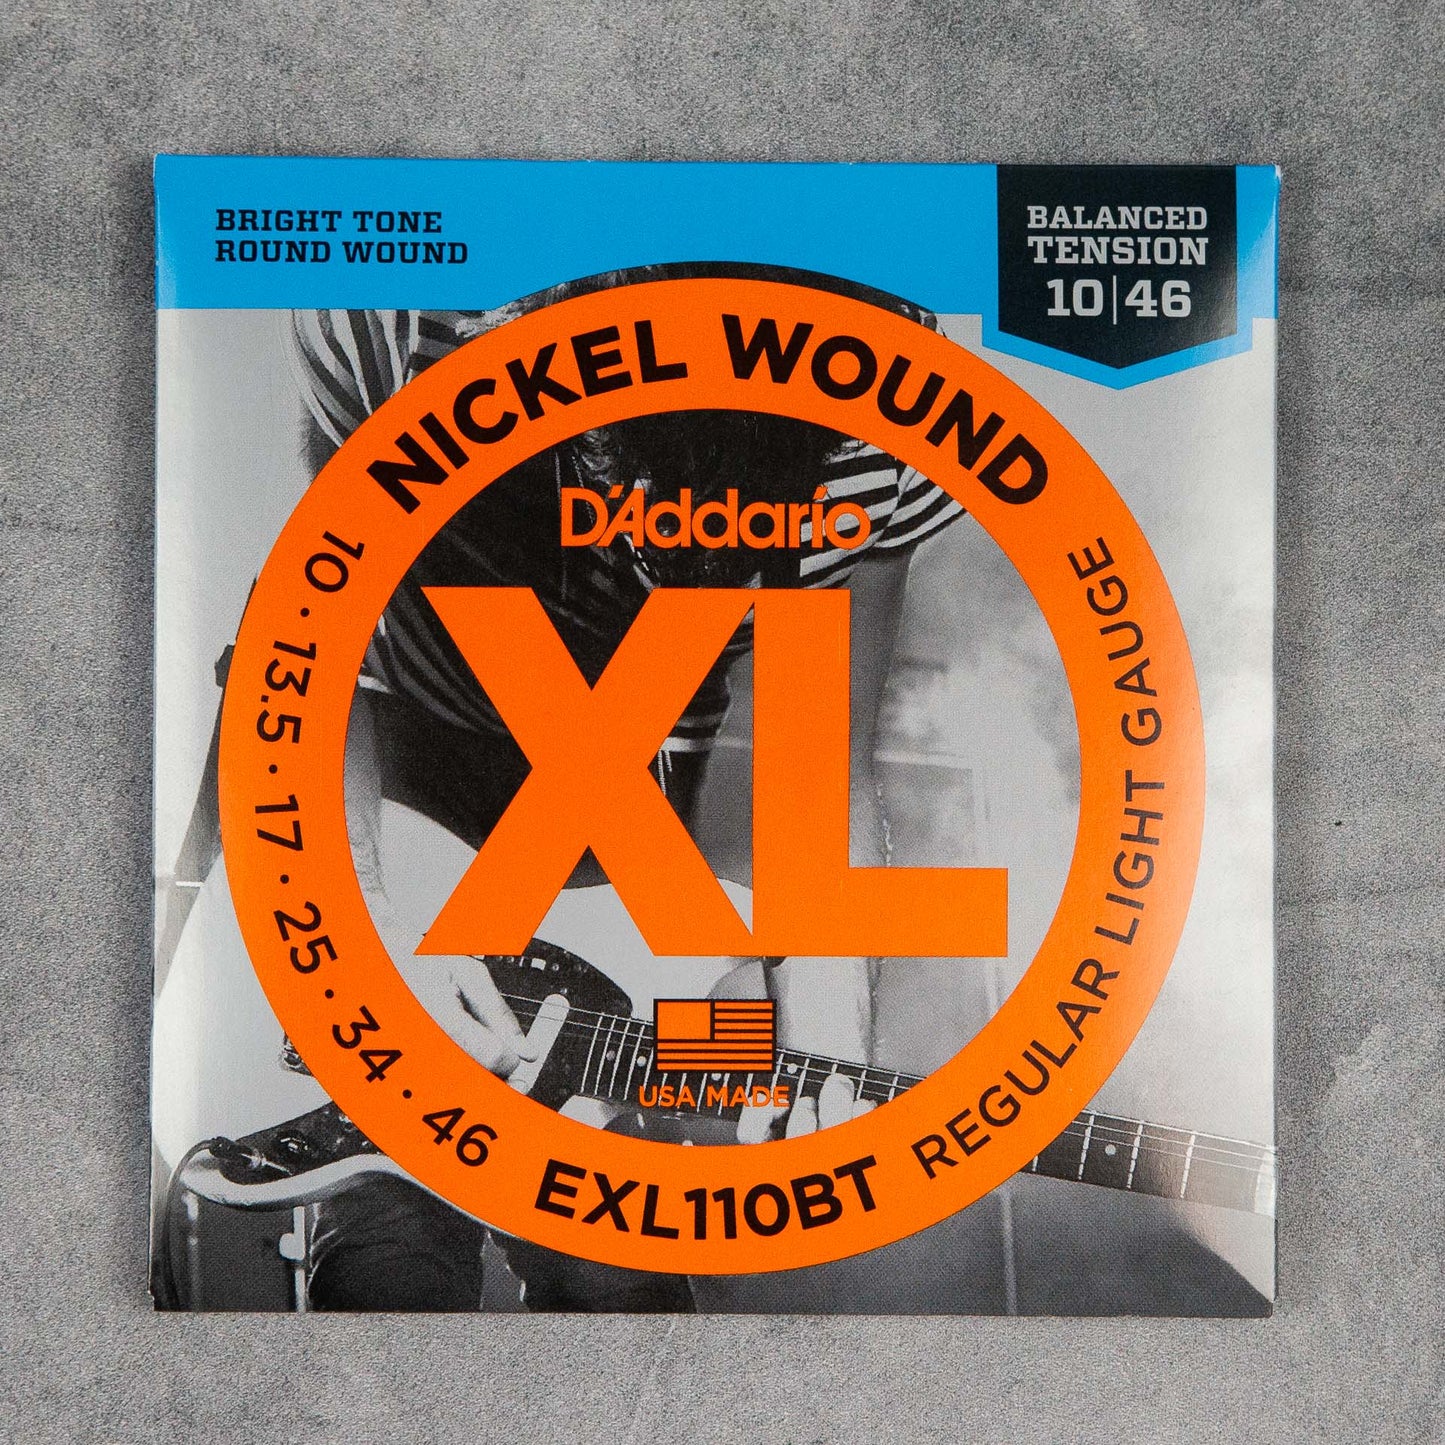 D'Addario EXL110BT Nickel Wound Electric Guitar Strings, 10-46, Balanced Tension Regular Light